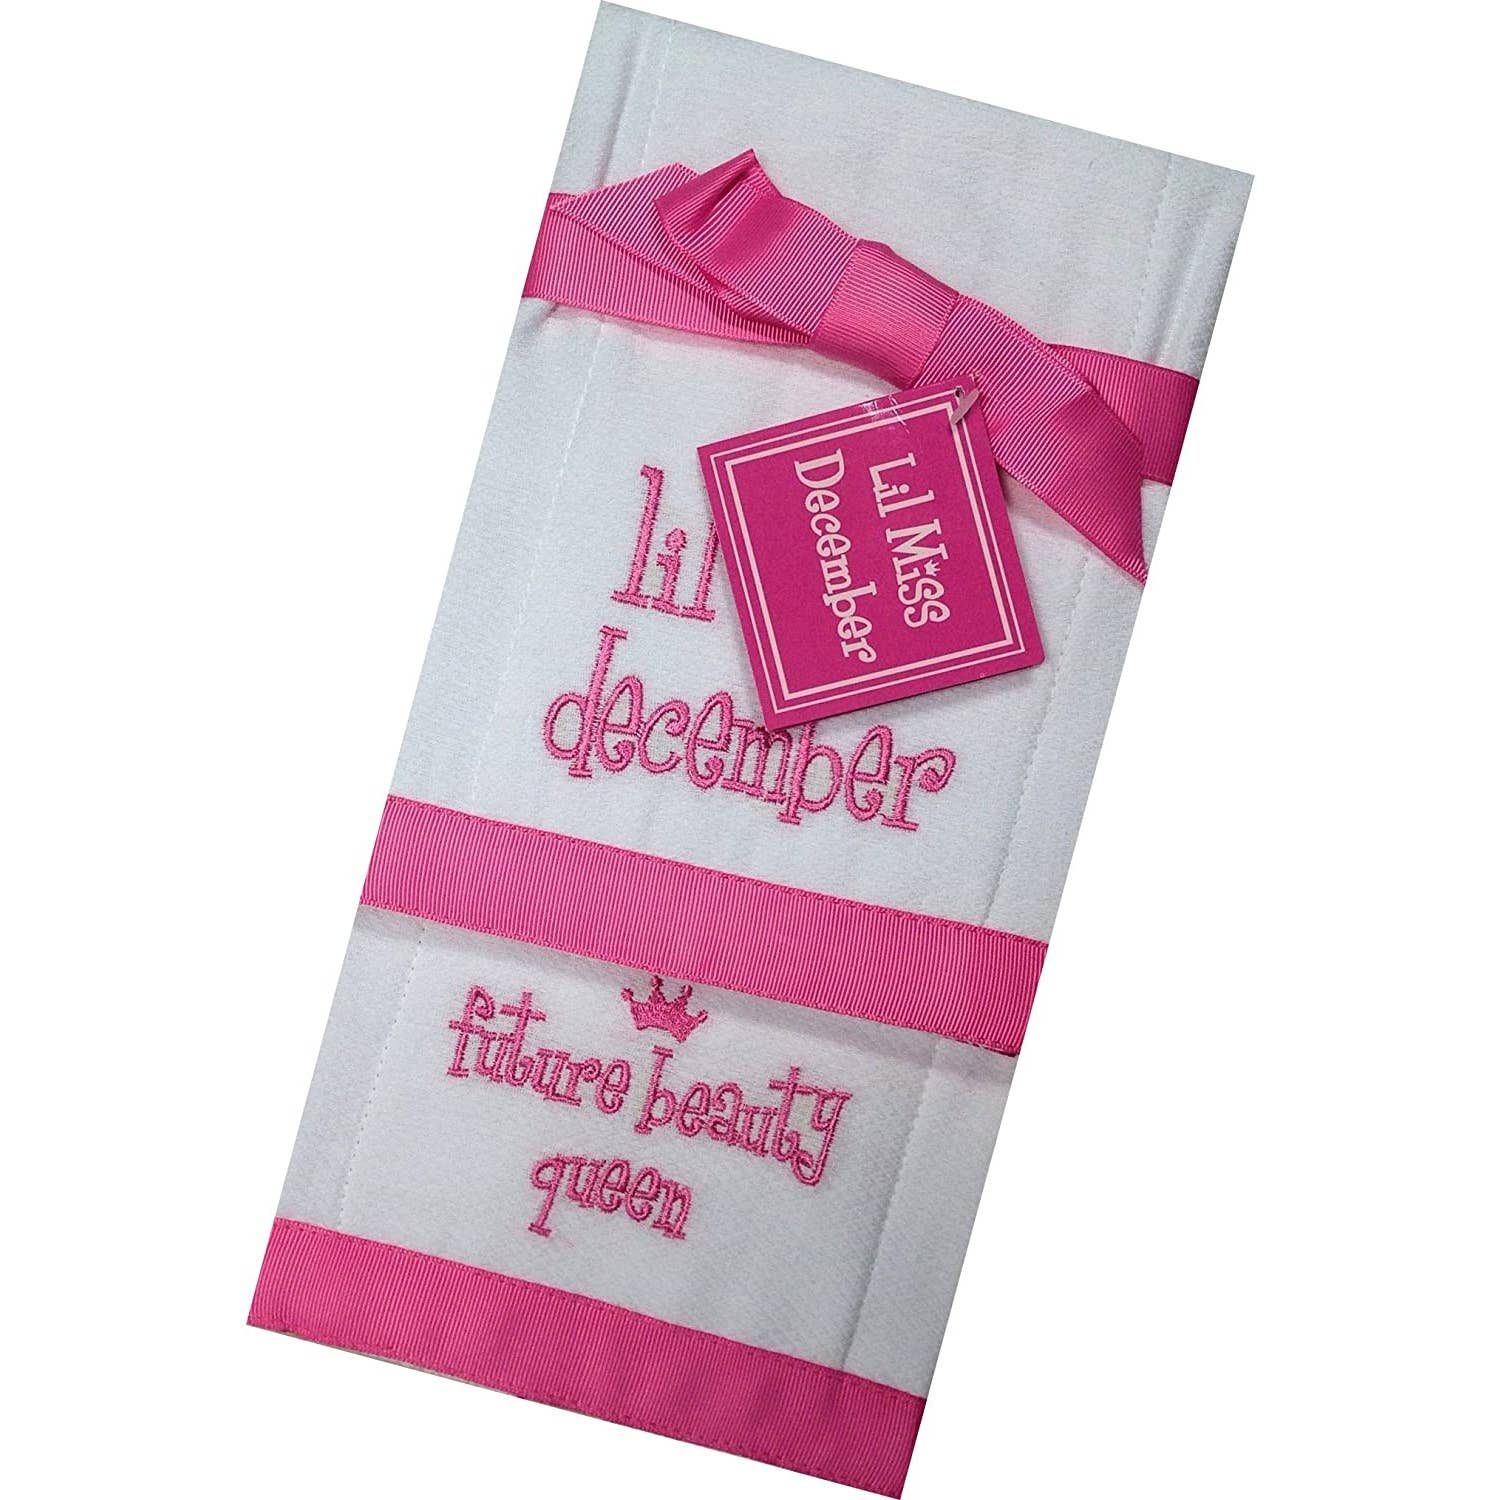 Lil Miss December Future Beauty Queen Baby Burp Bib Cloth Cotton Towel Set of 2